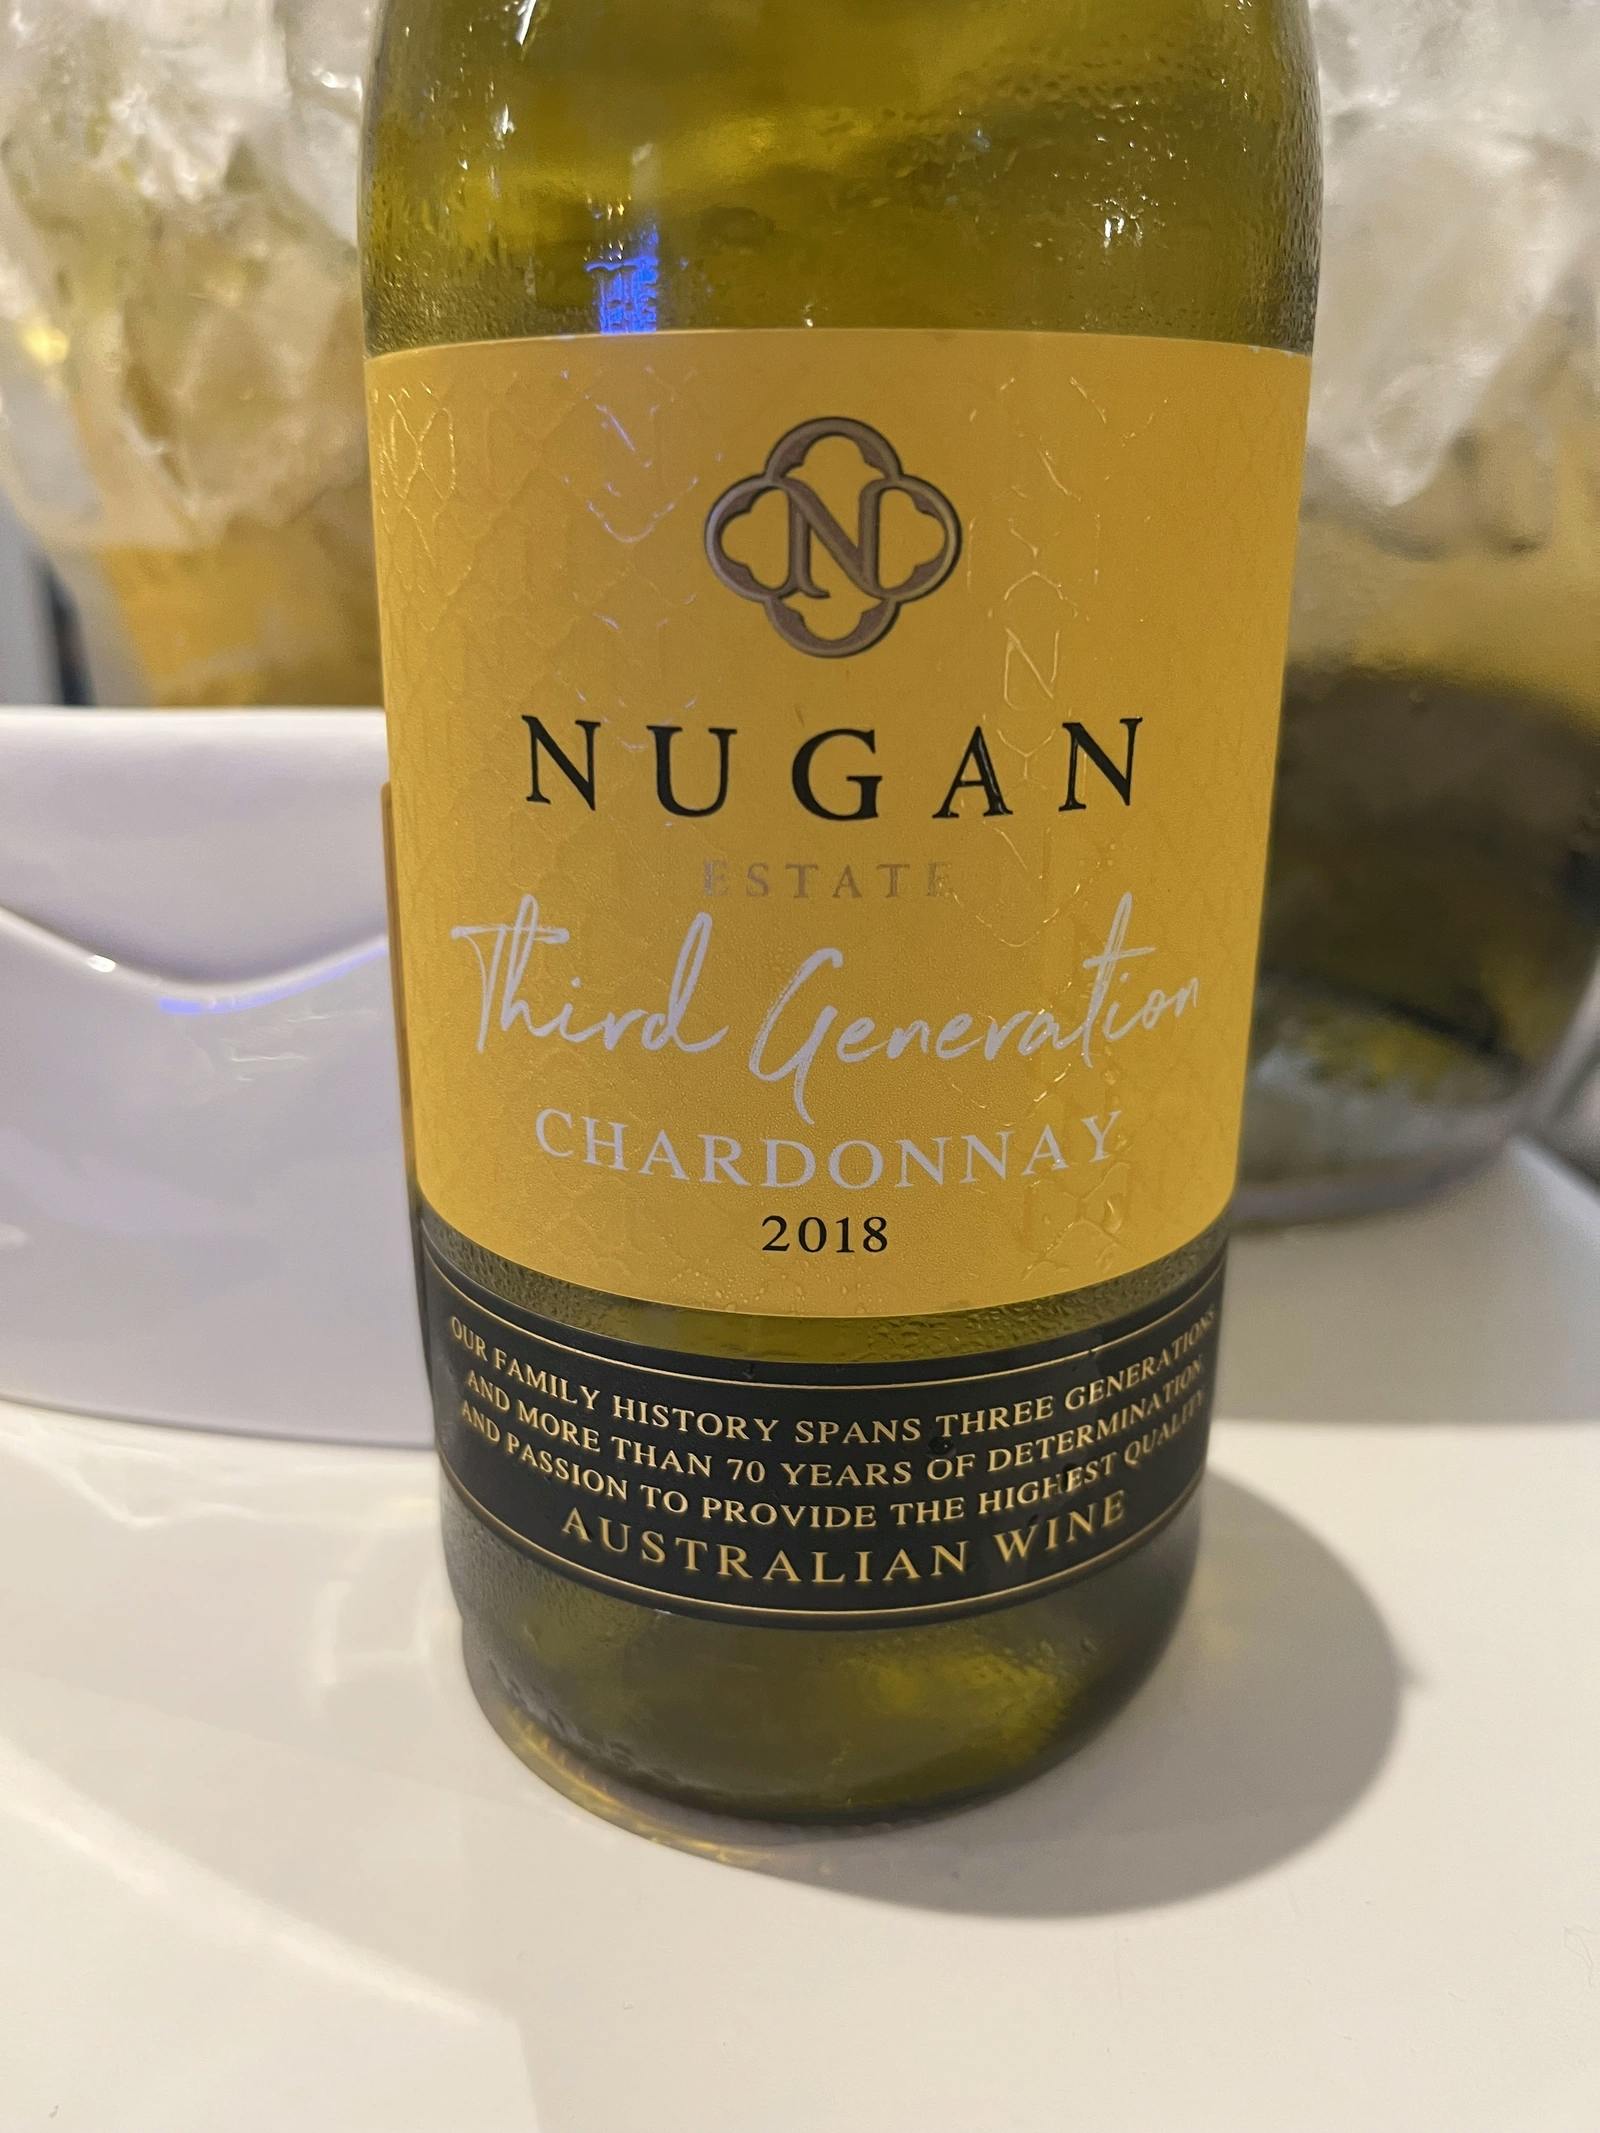 Nugan Estate Third Generation Chardonnay 2018